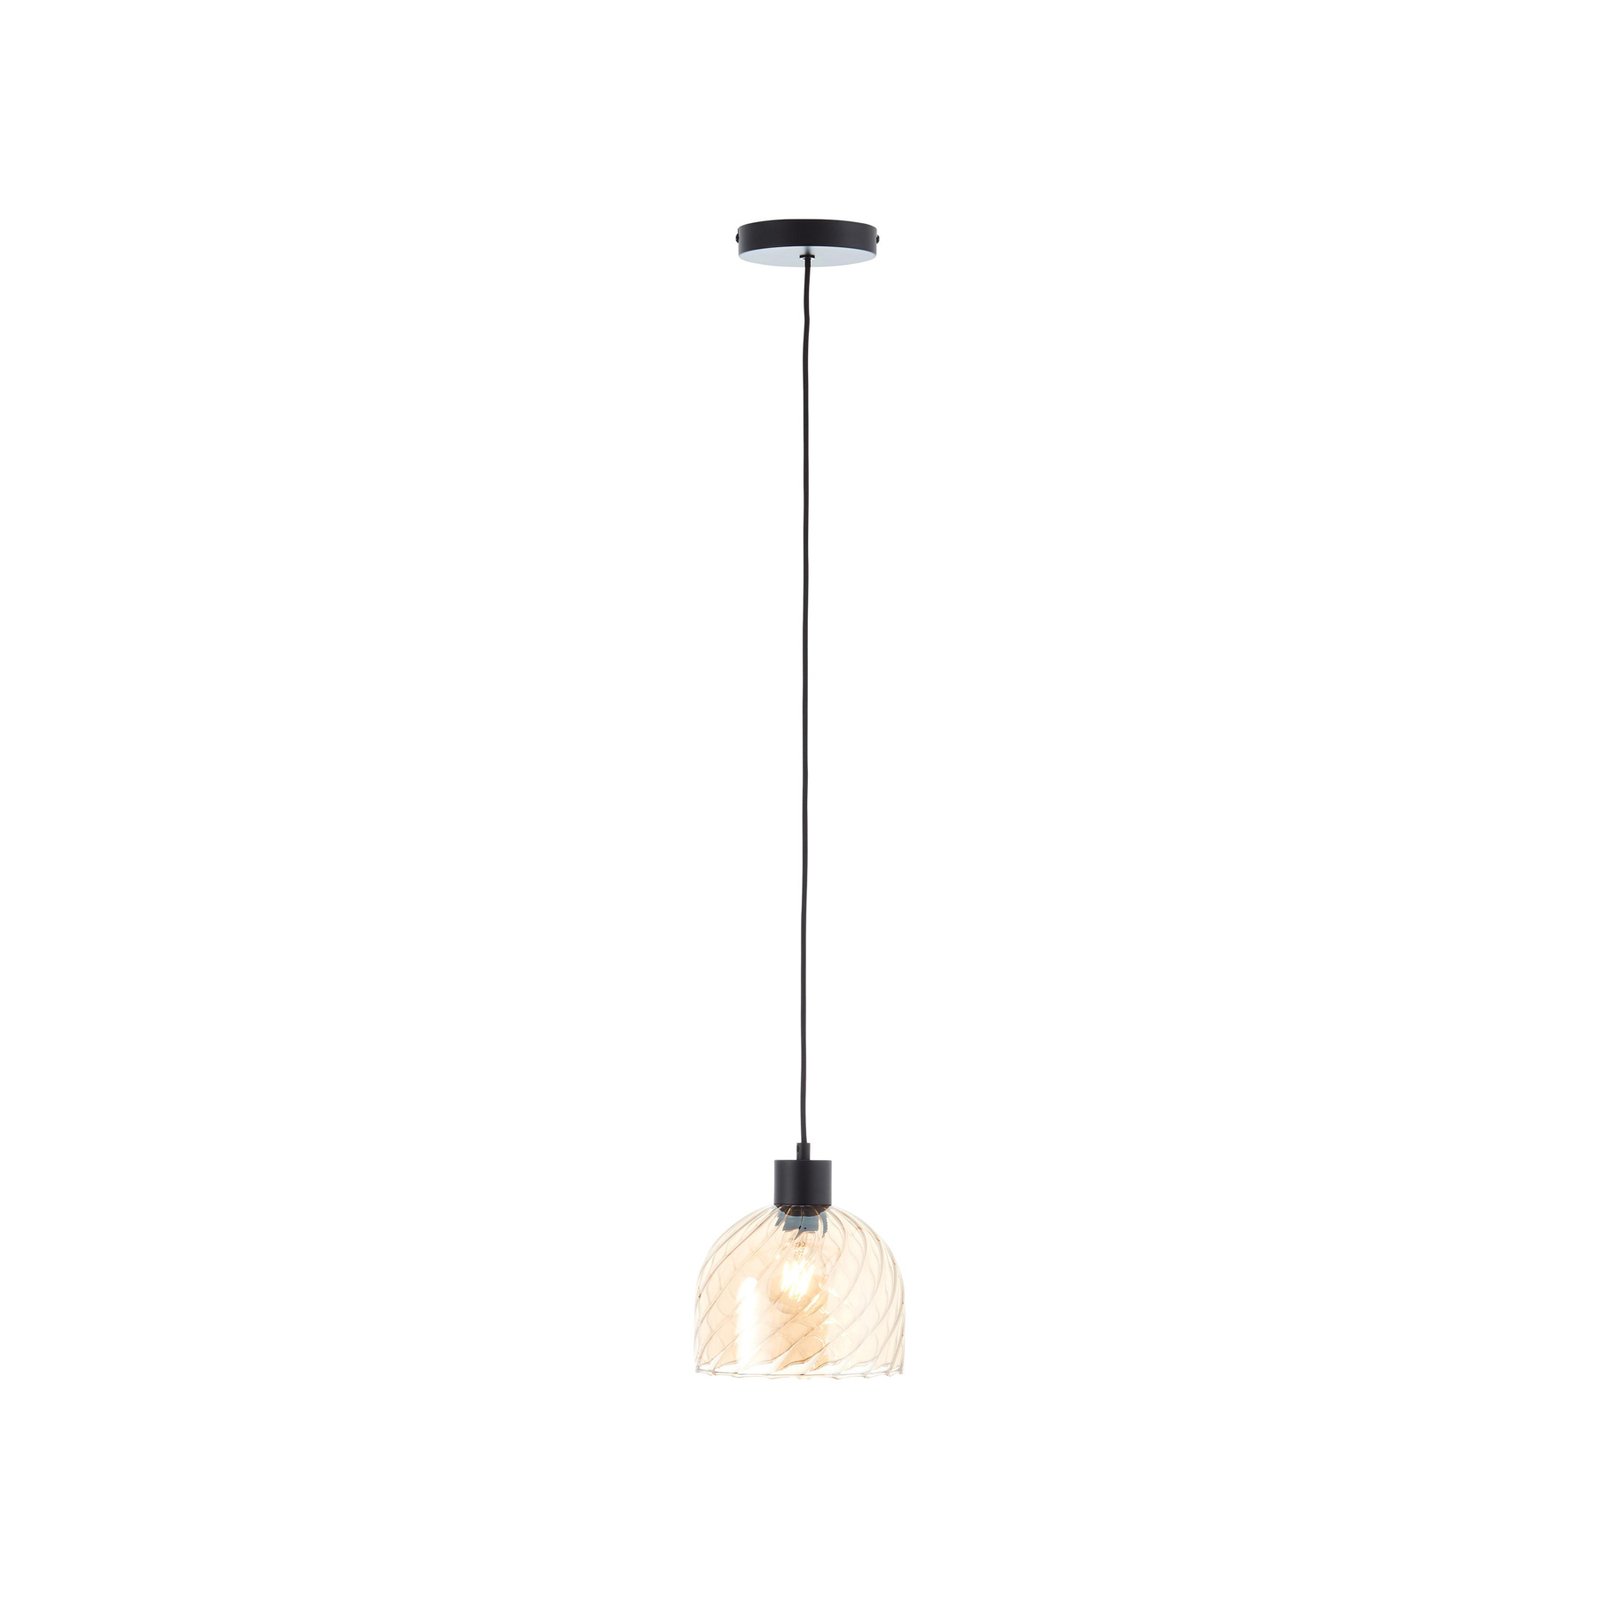 Casto hanglamp, Ø 19 cm, barnsteen, glas